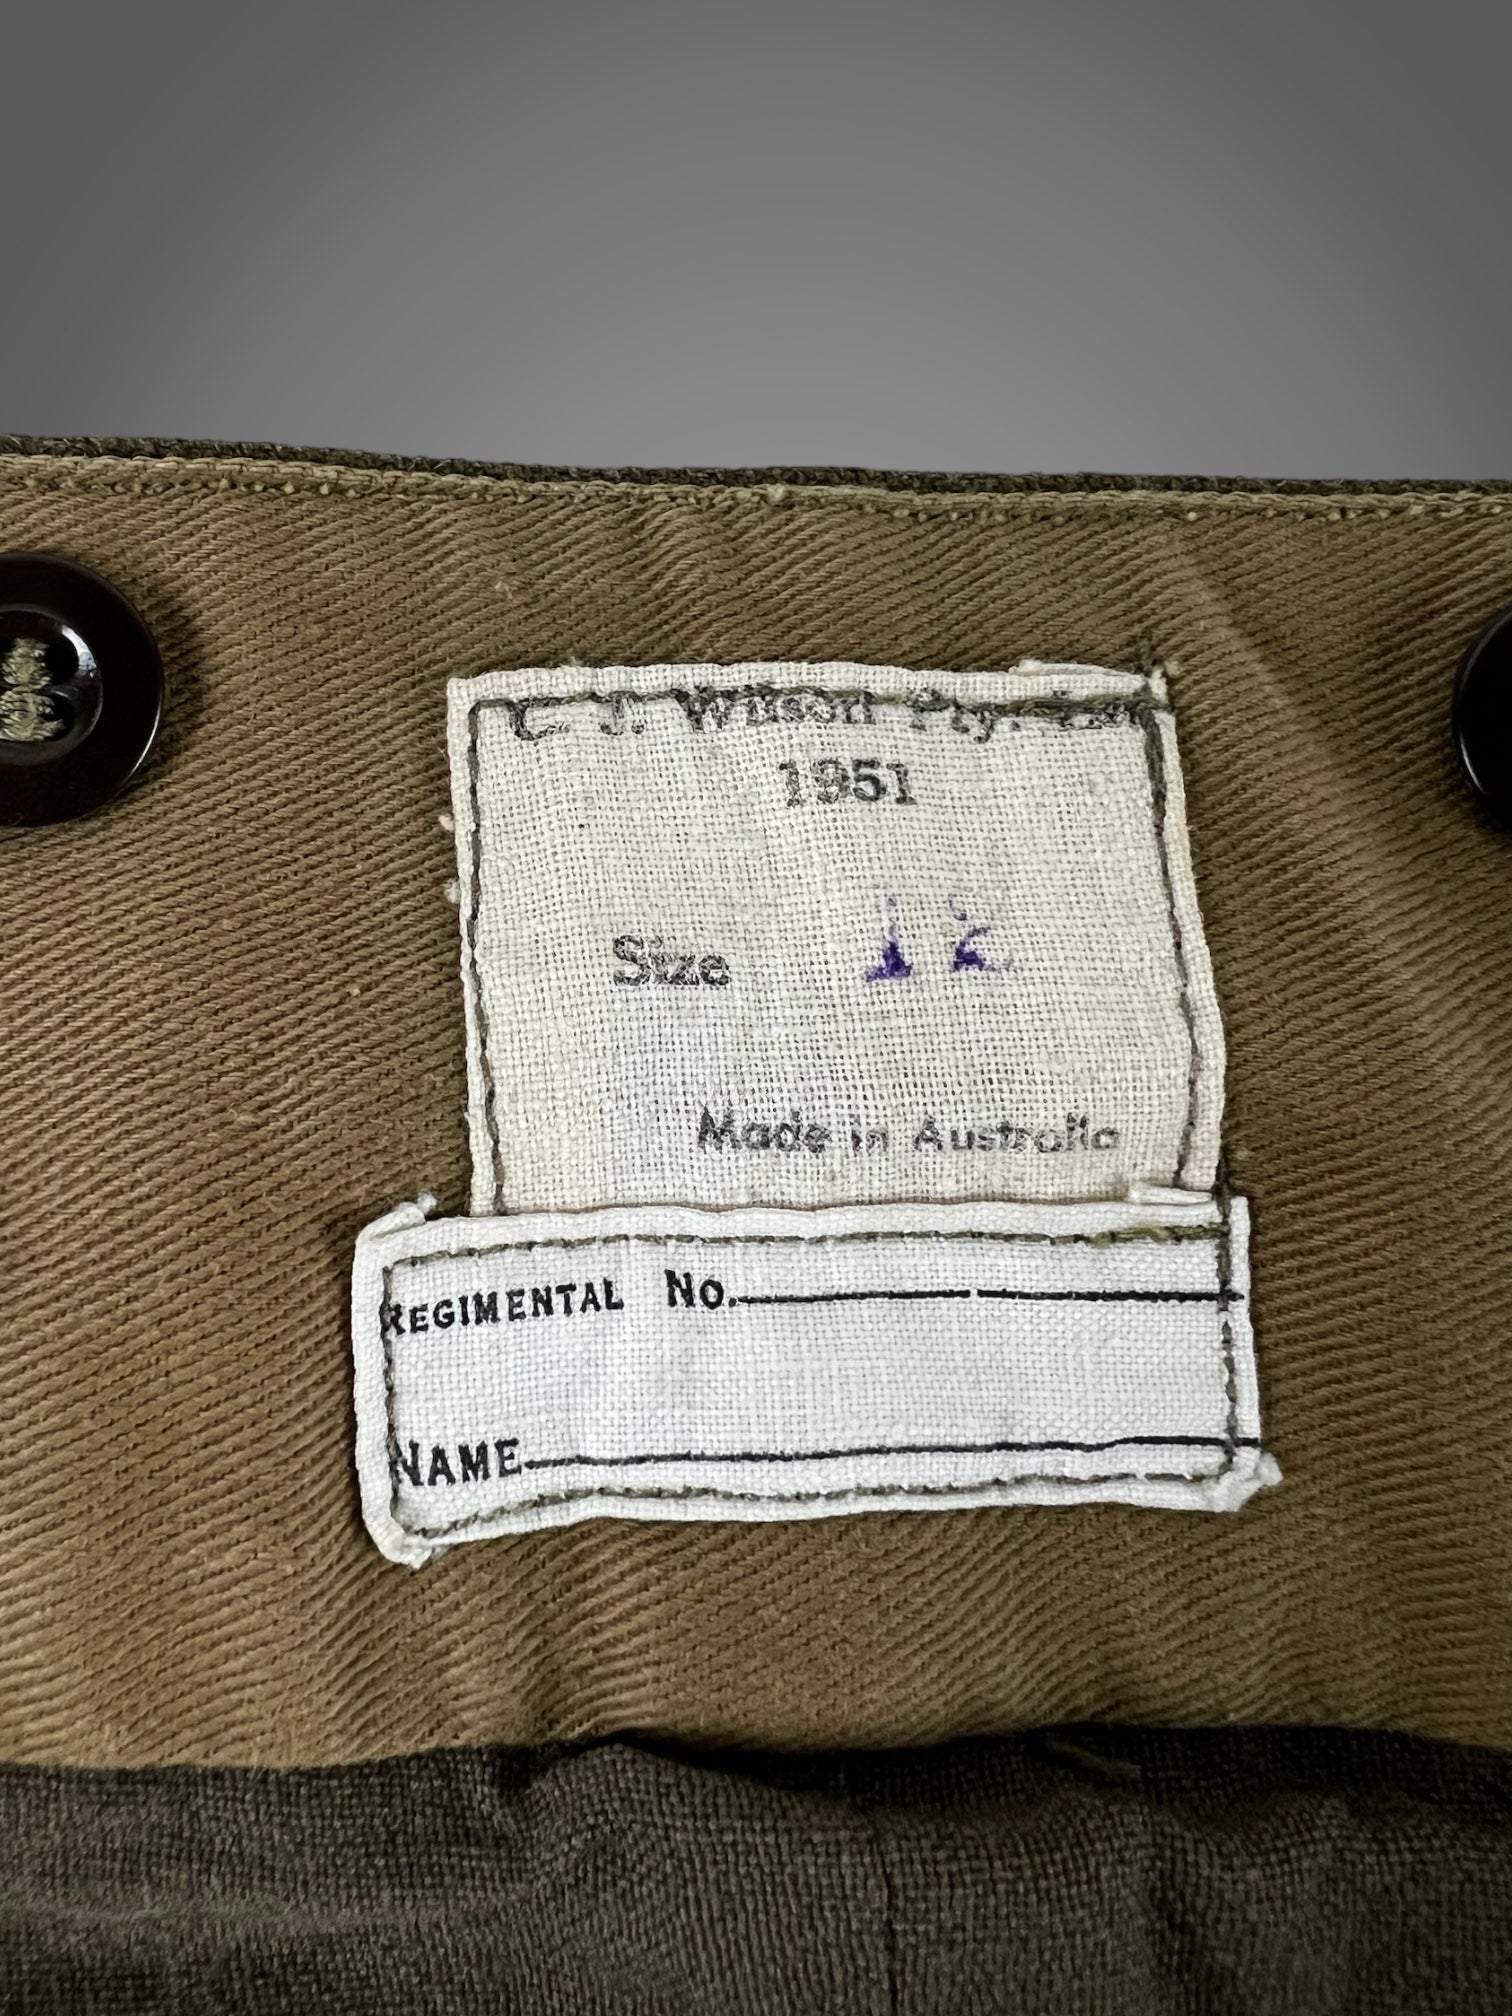 1951 wool Australien adjustable military cargo pants 34x32”